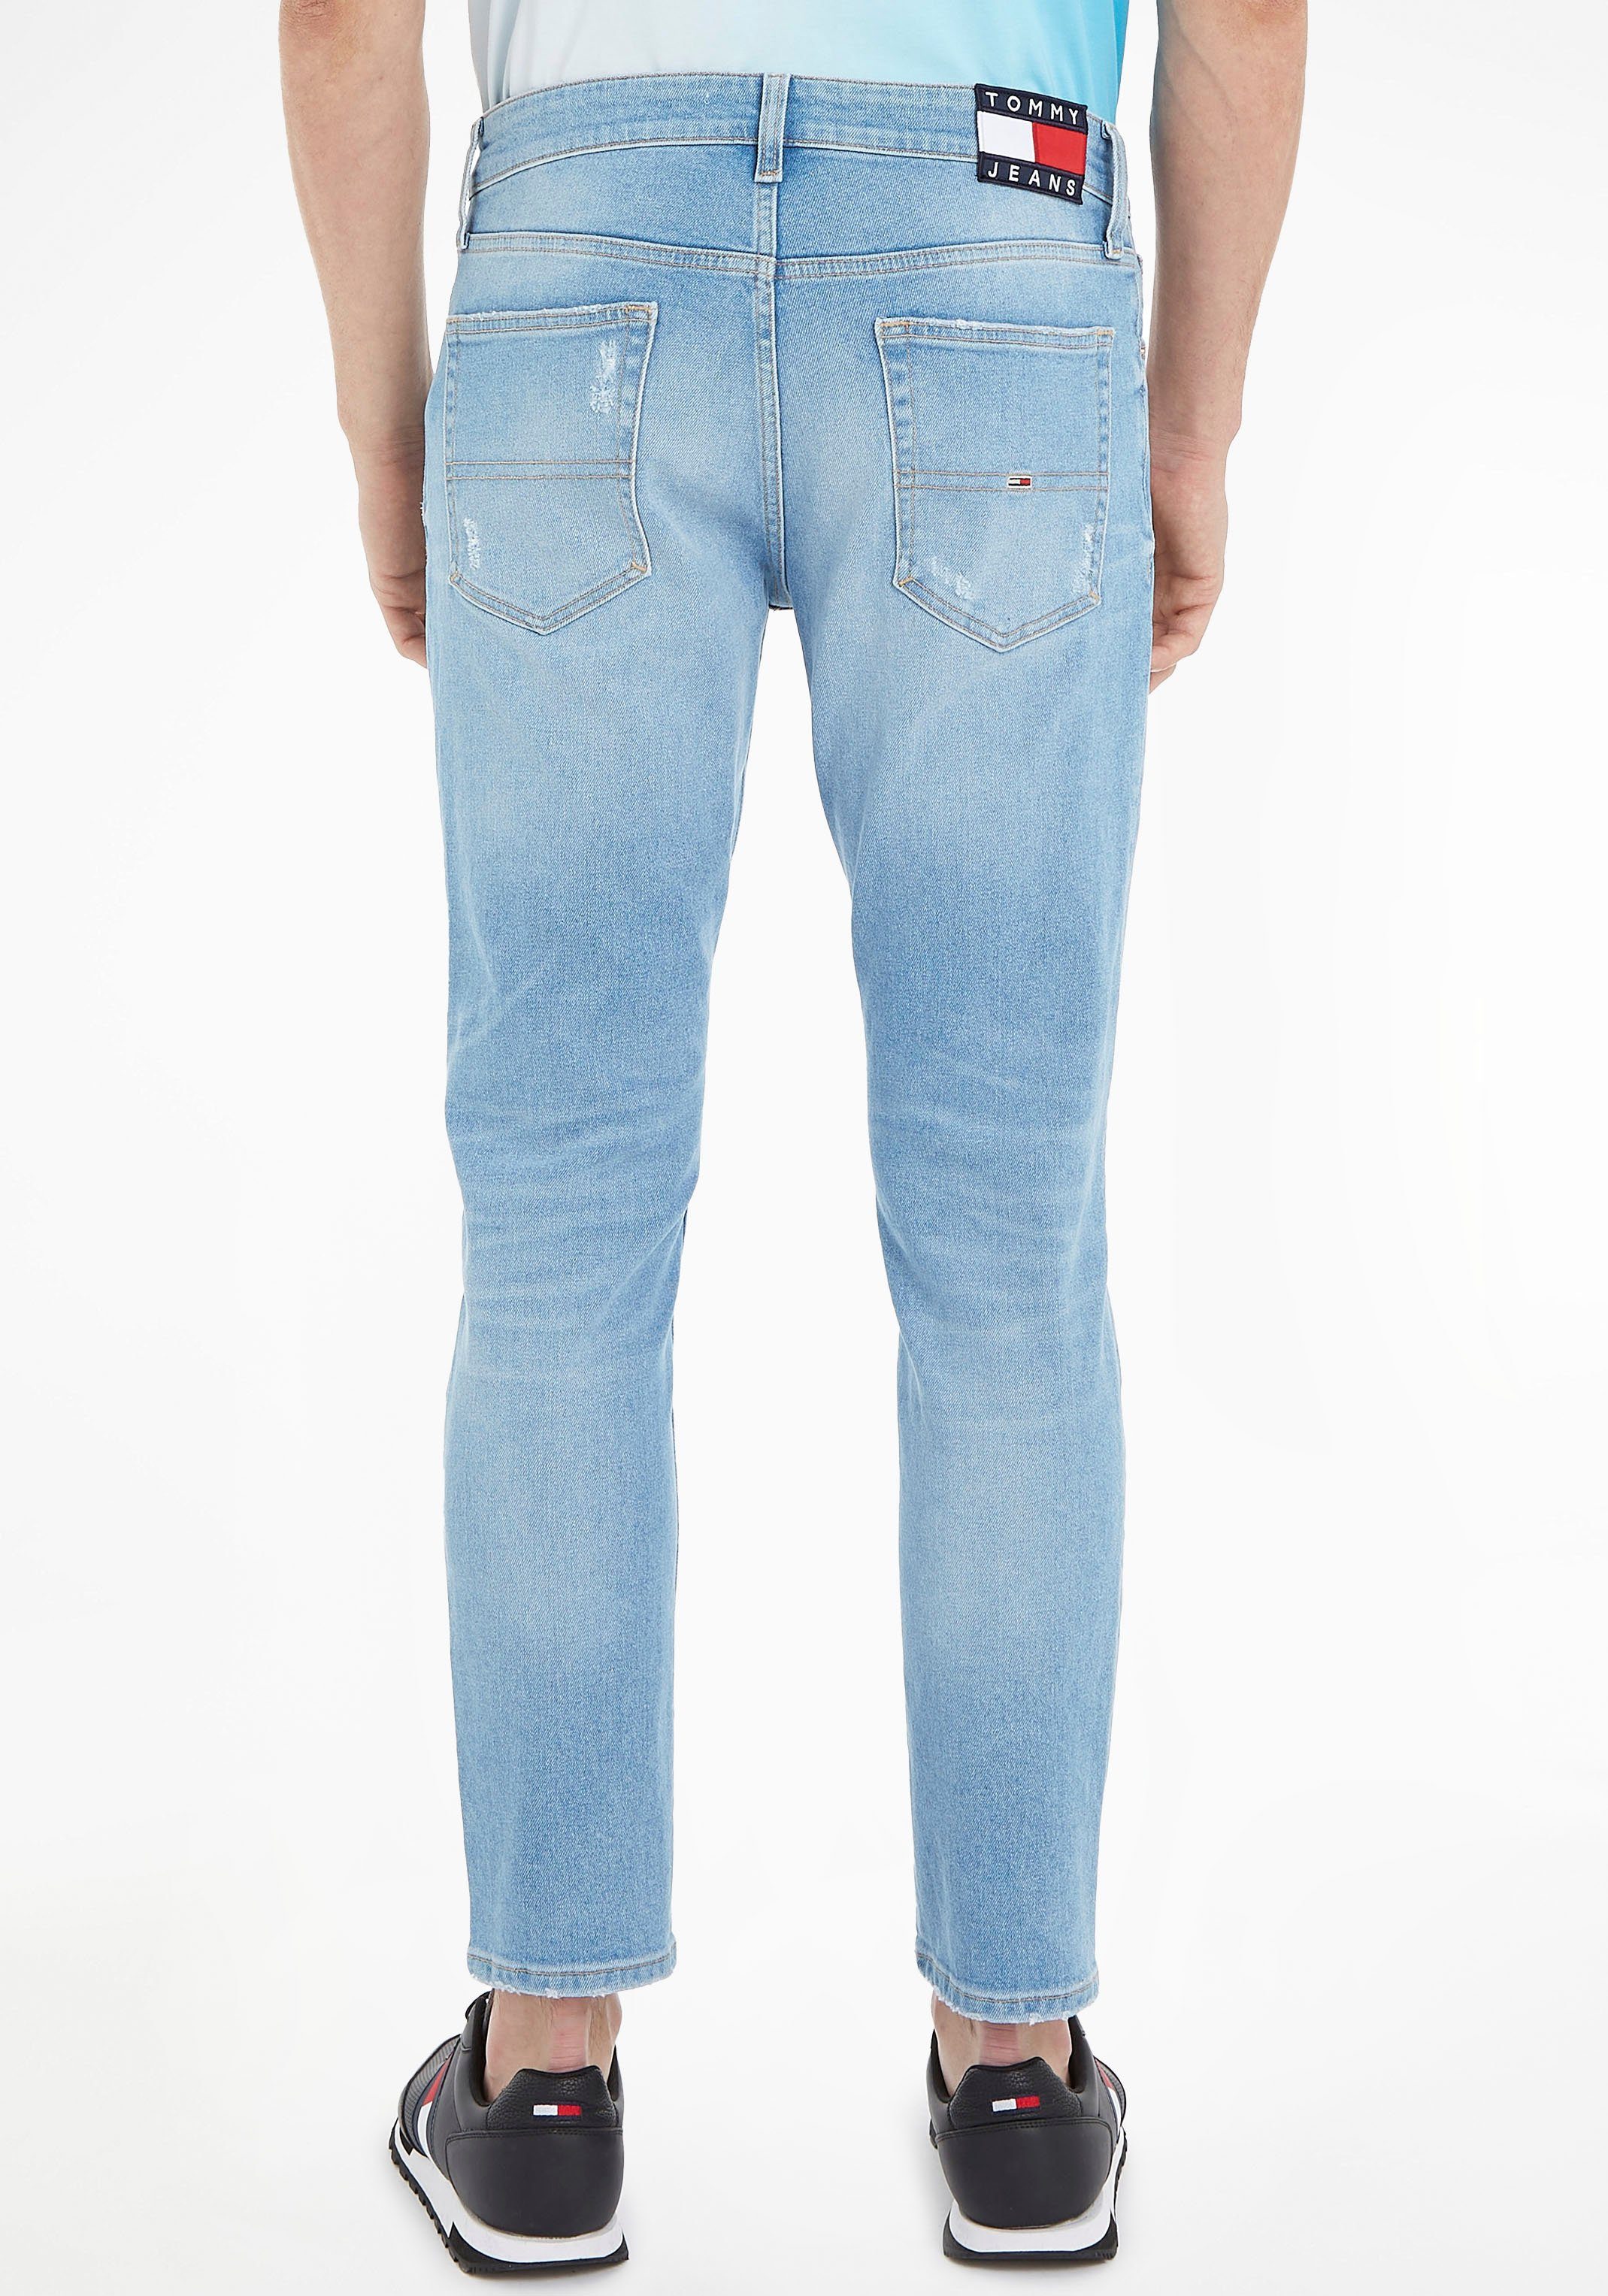 TPRD AUSTIN Tommy SLIM Markenlabel BG7114 DenimLight mit Jeans Slim-fit-Jeans